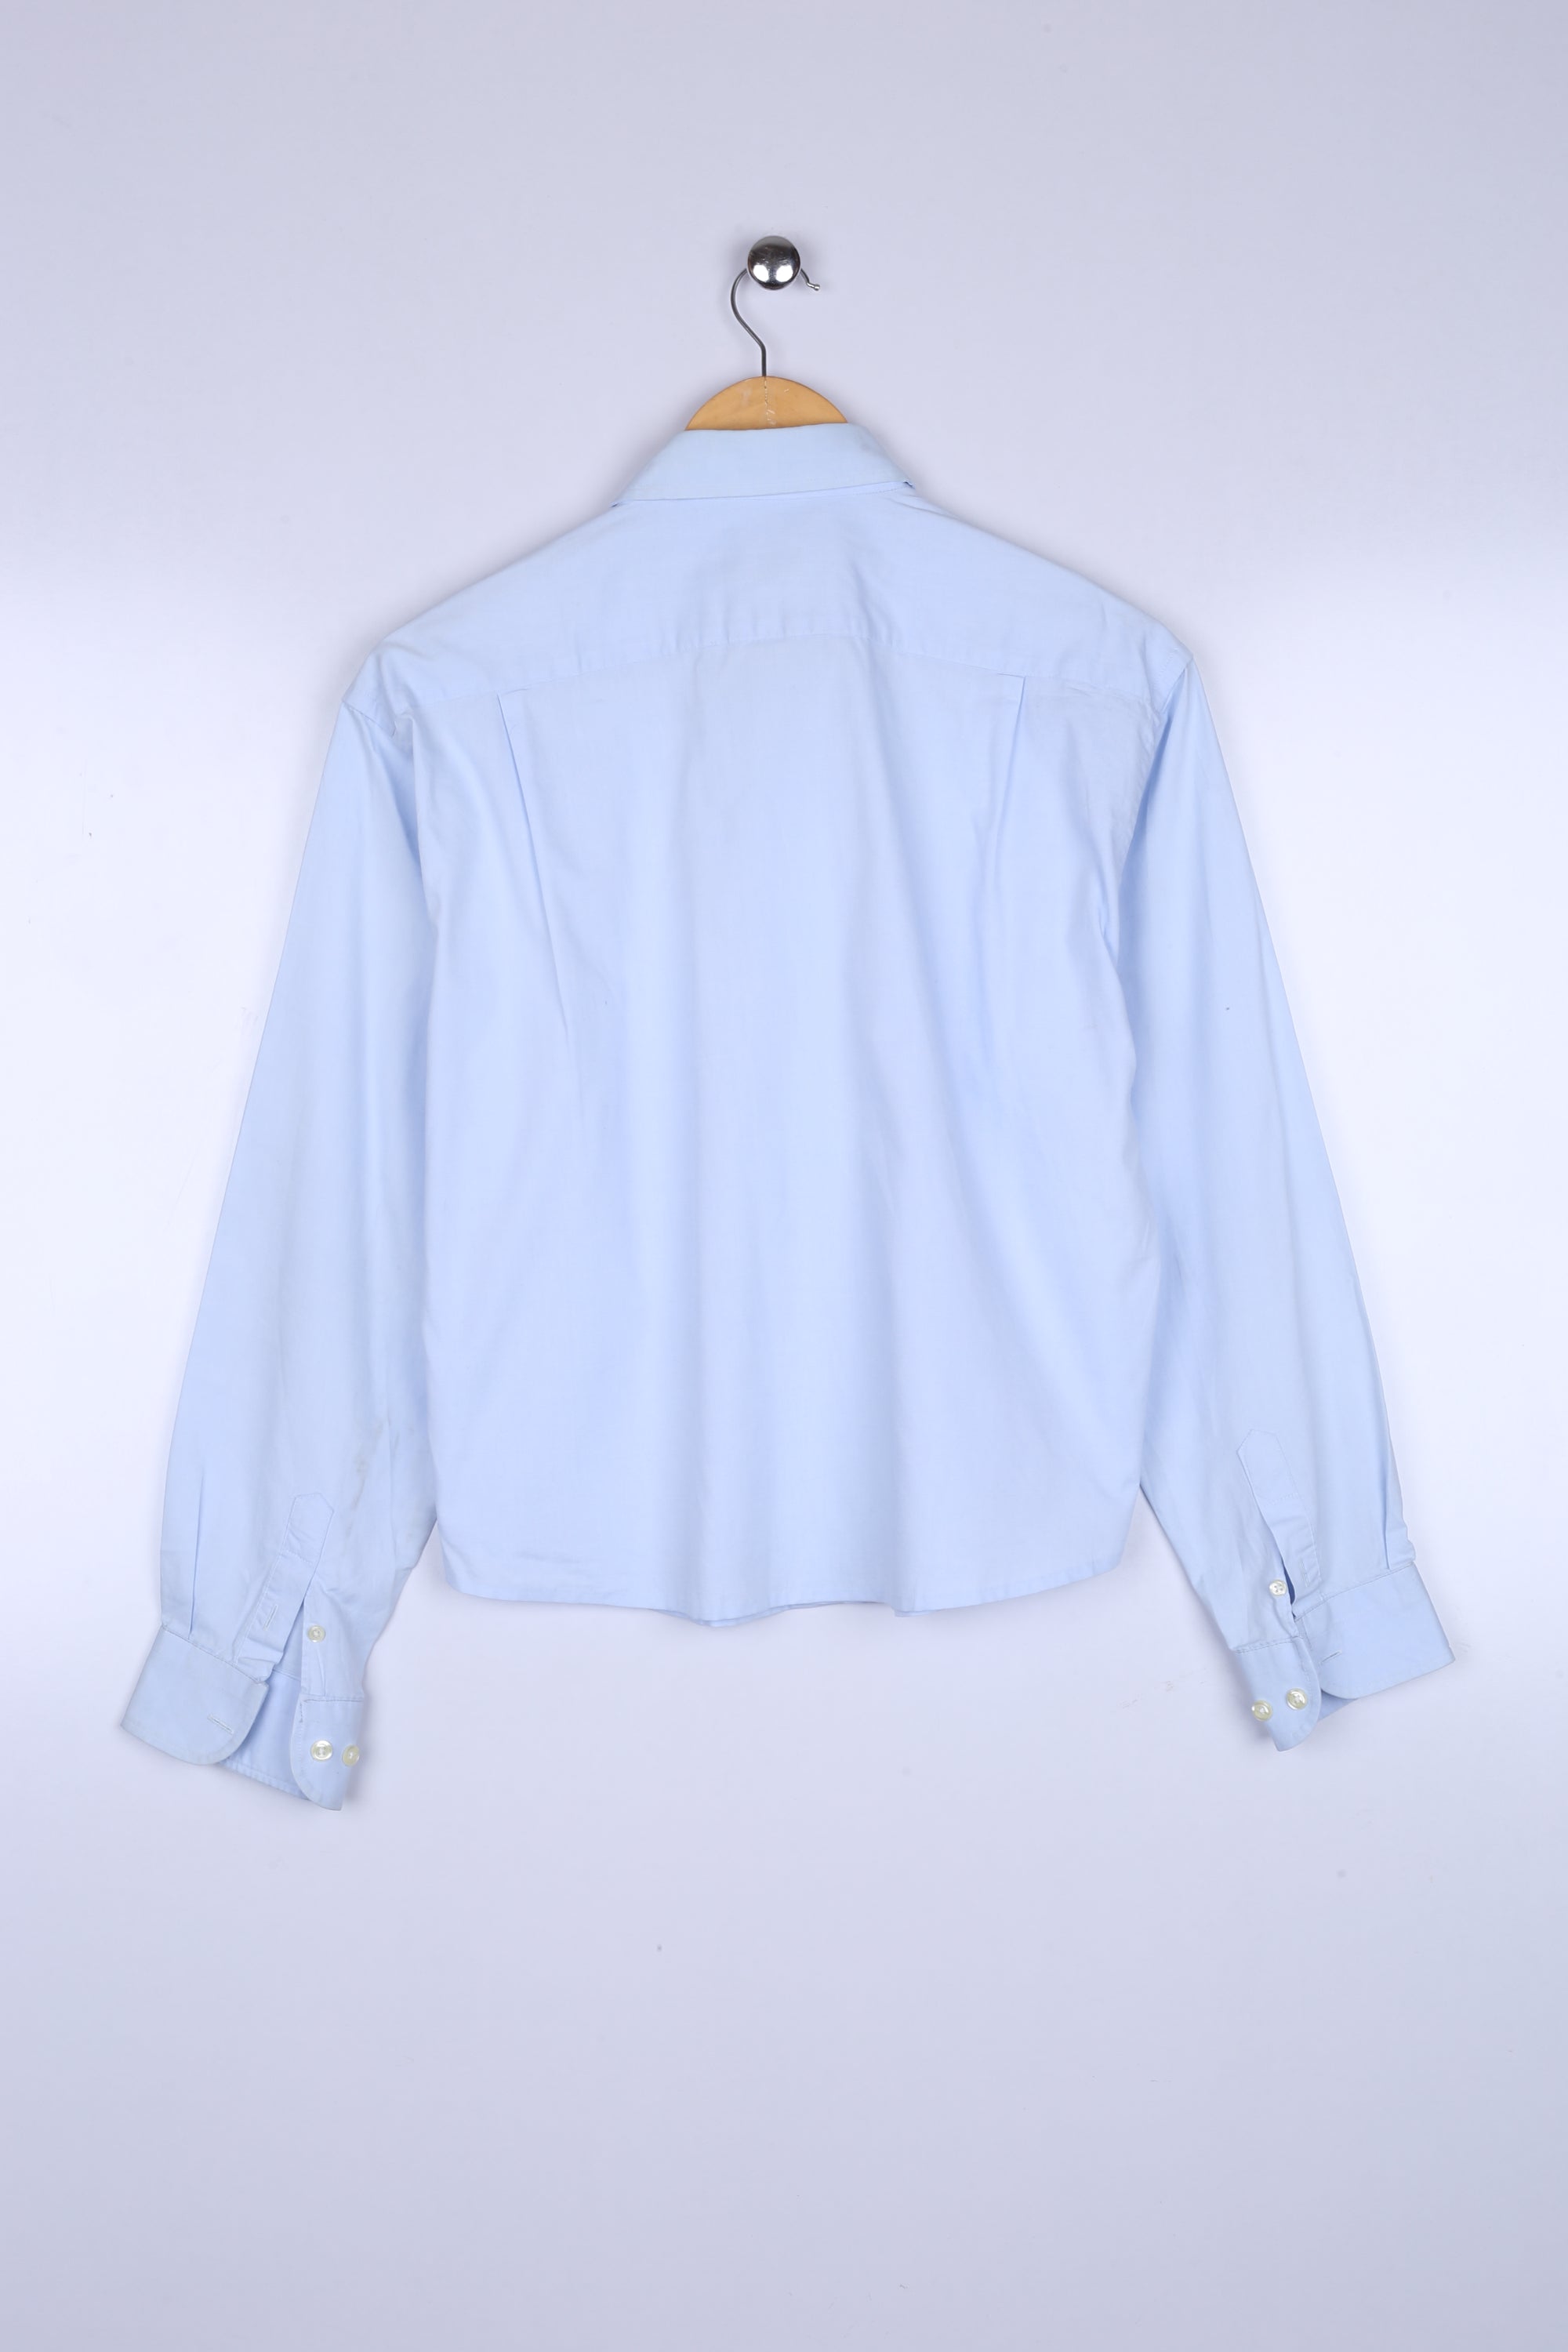 Vintage Polo Sur Basic Shirt Sky Blue